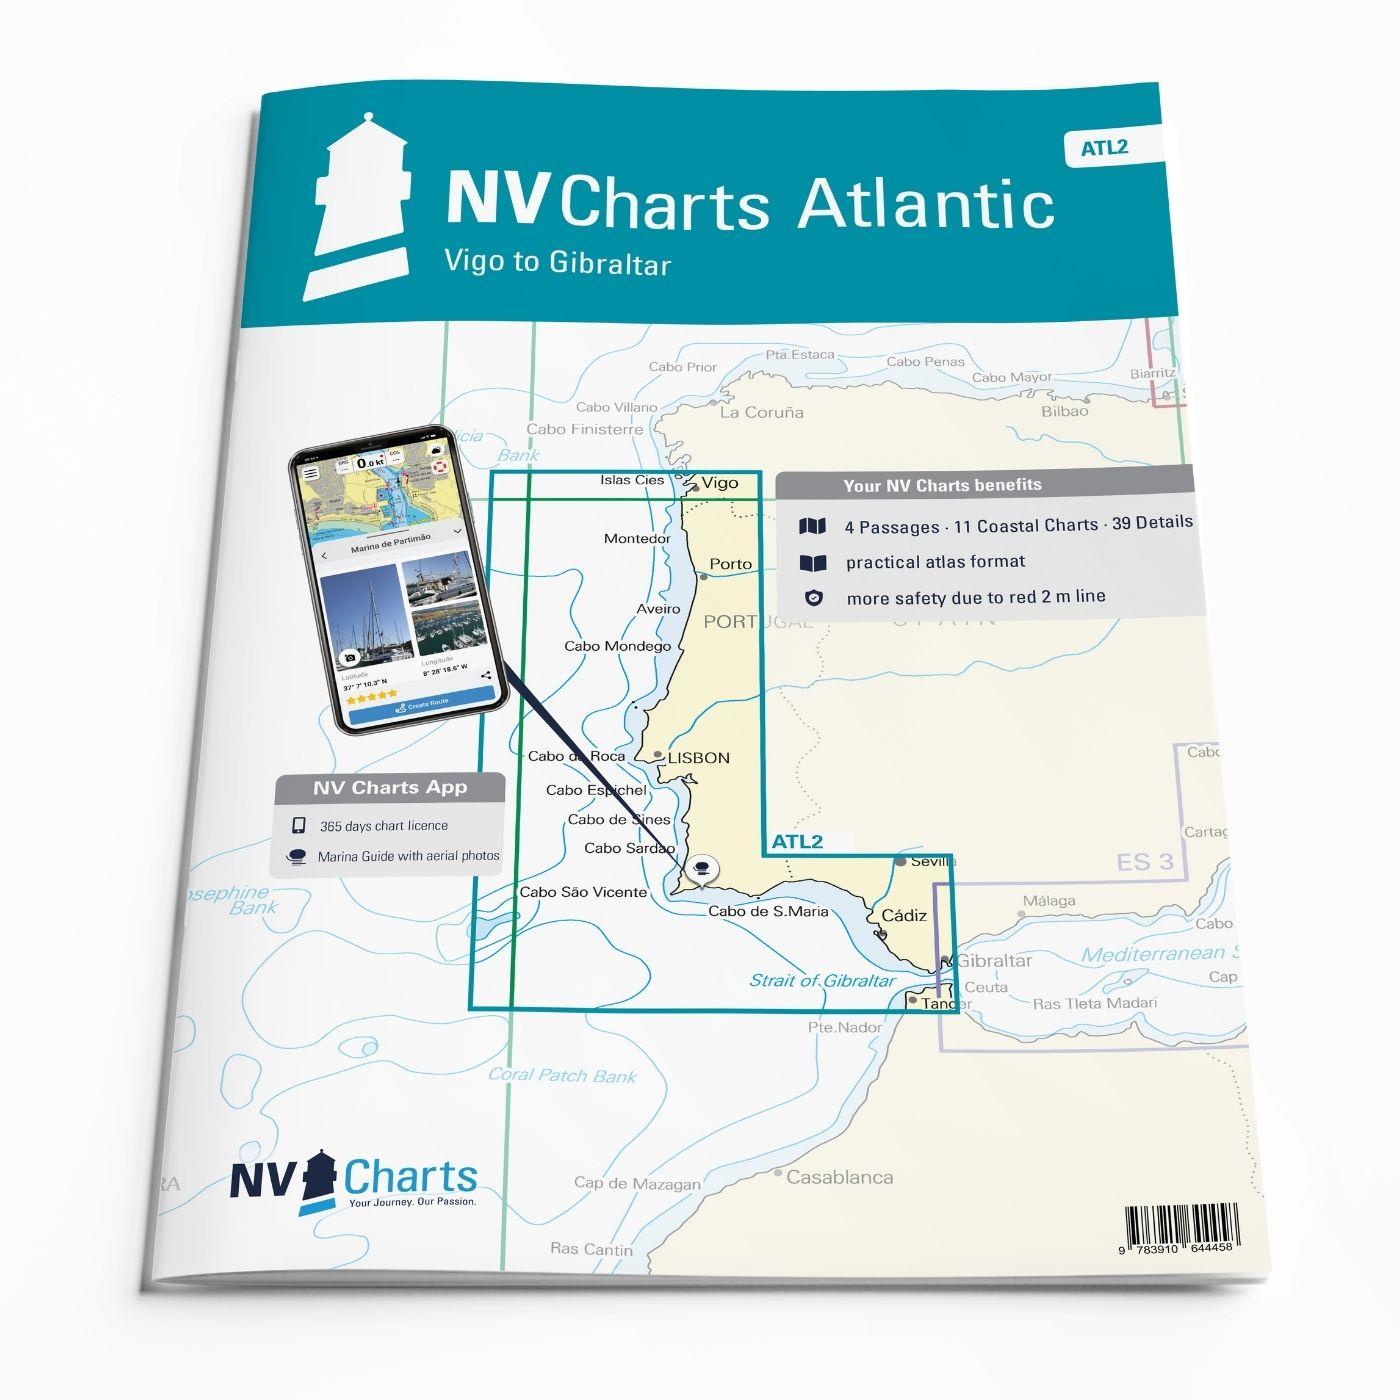 NV Charts Atlantic ATL2 - Vigo to Gibraltar